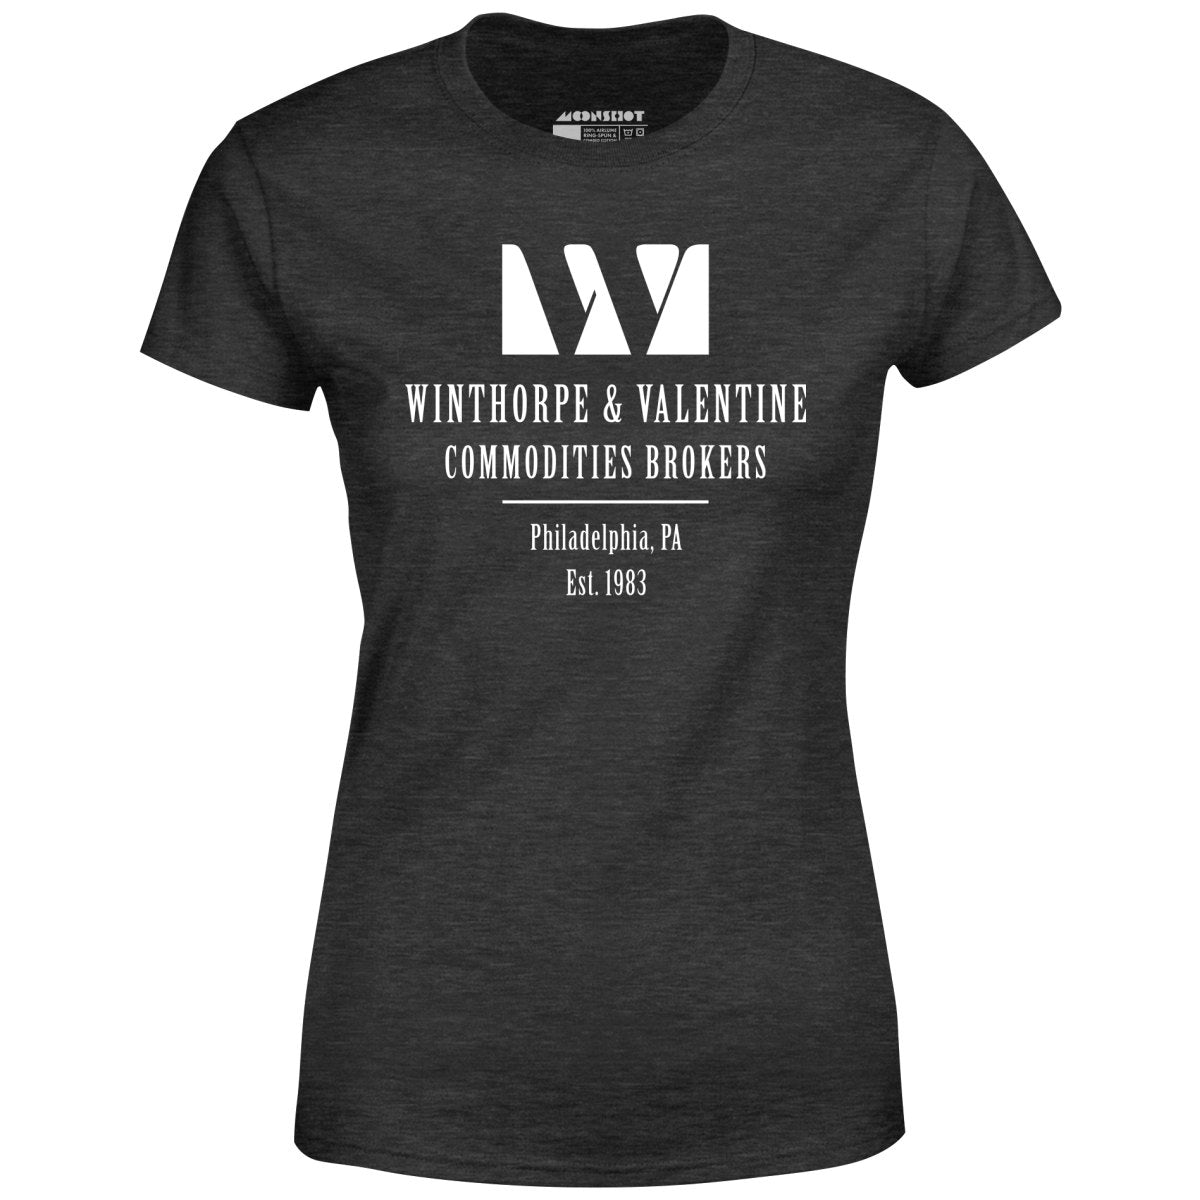 Winthorpe & Valentine Commodities Brokers - Women's T-Shirt